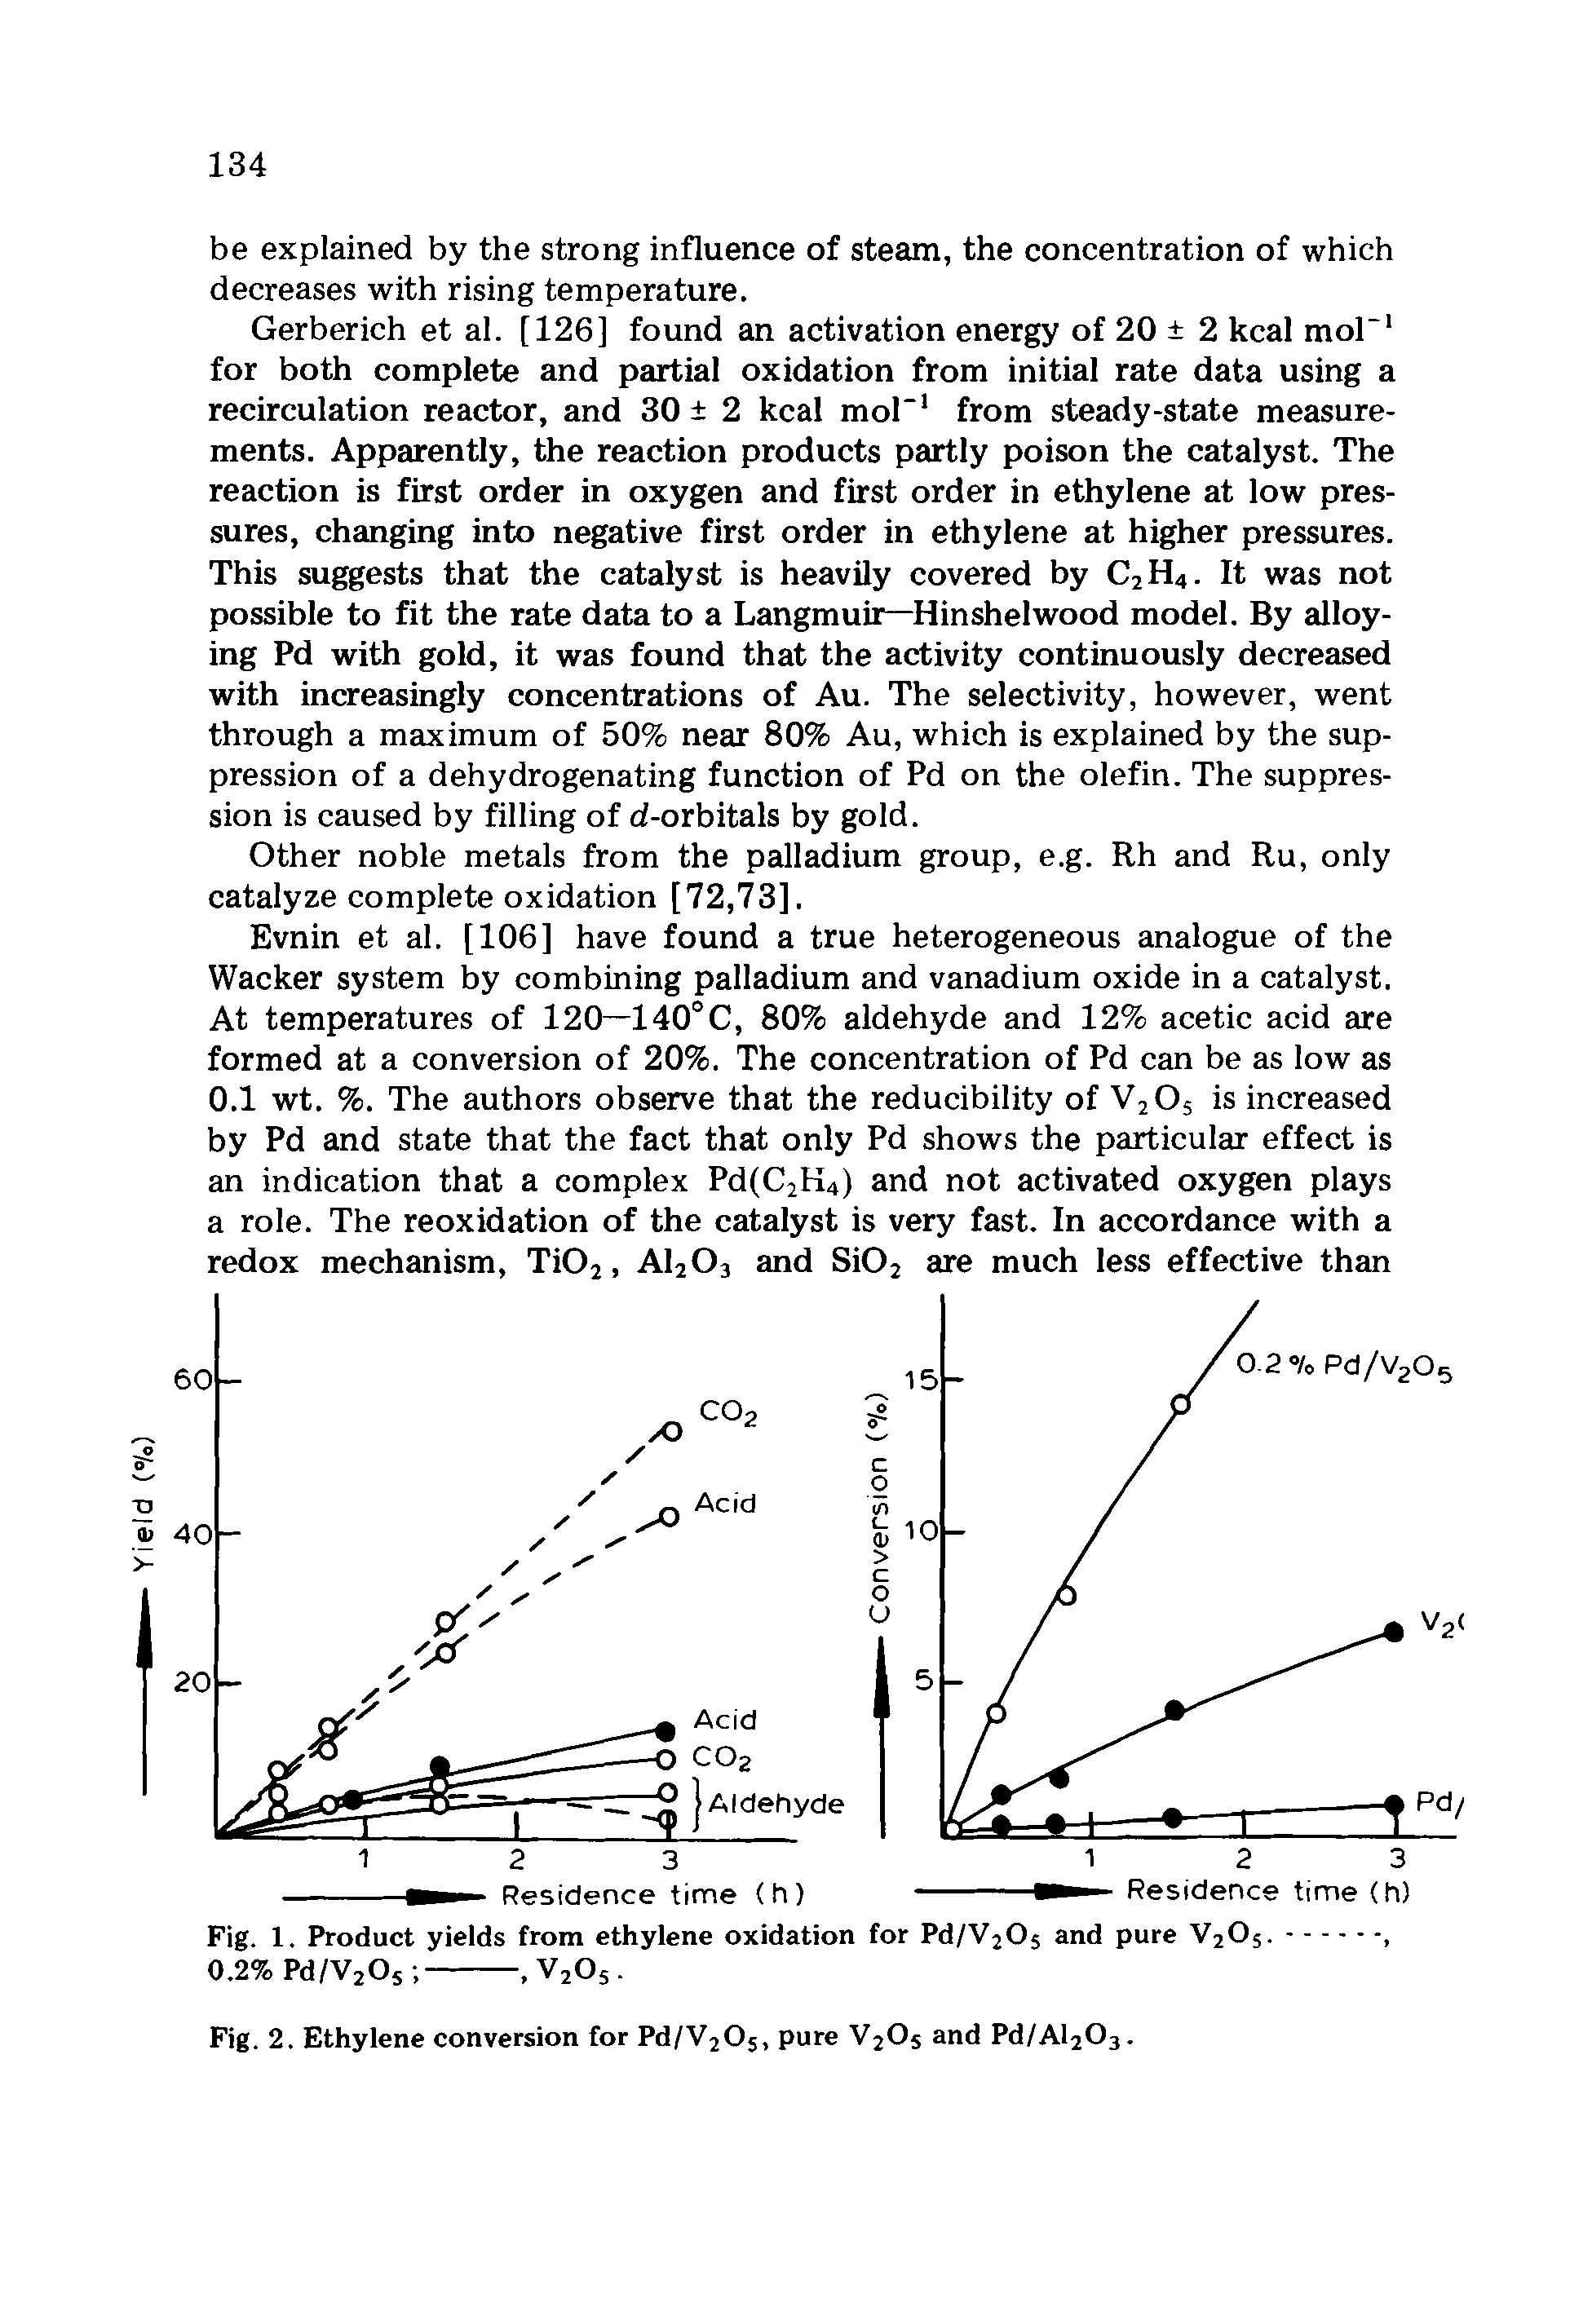 Fig. 2. Ethylene conversion for Pd/V205, pure V2Os and Pd/Al203.